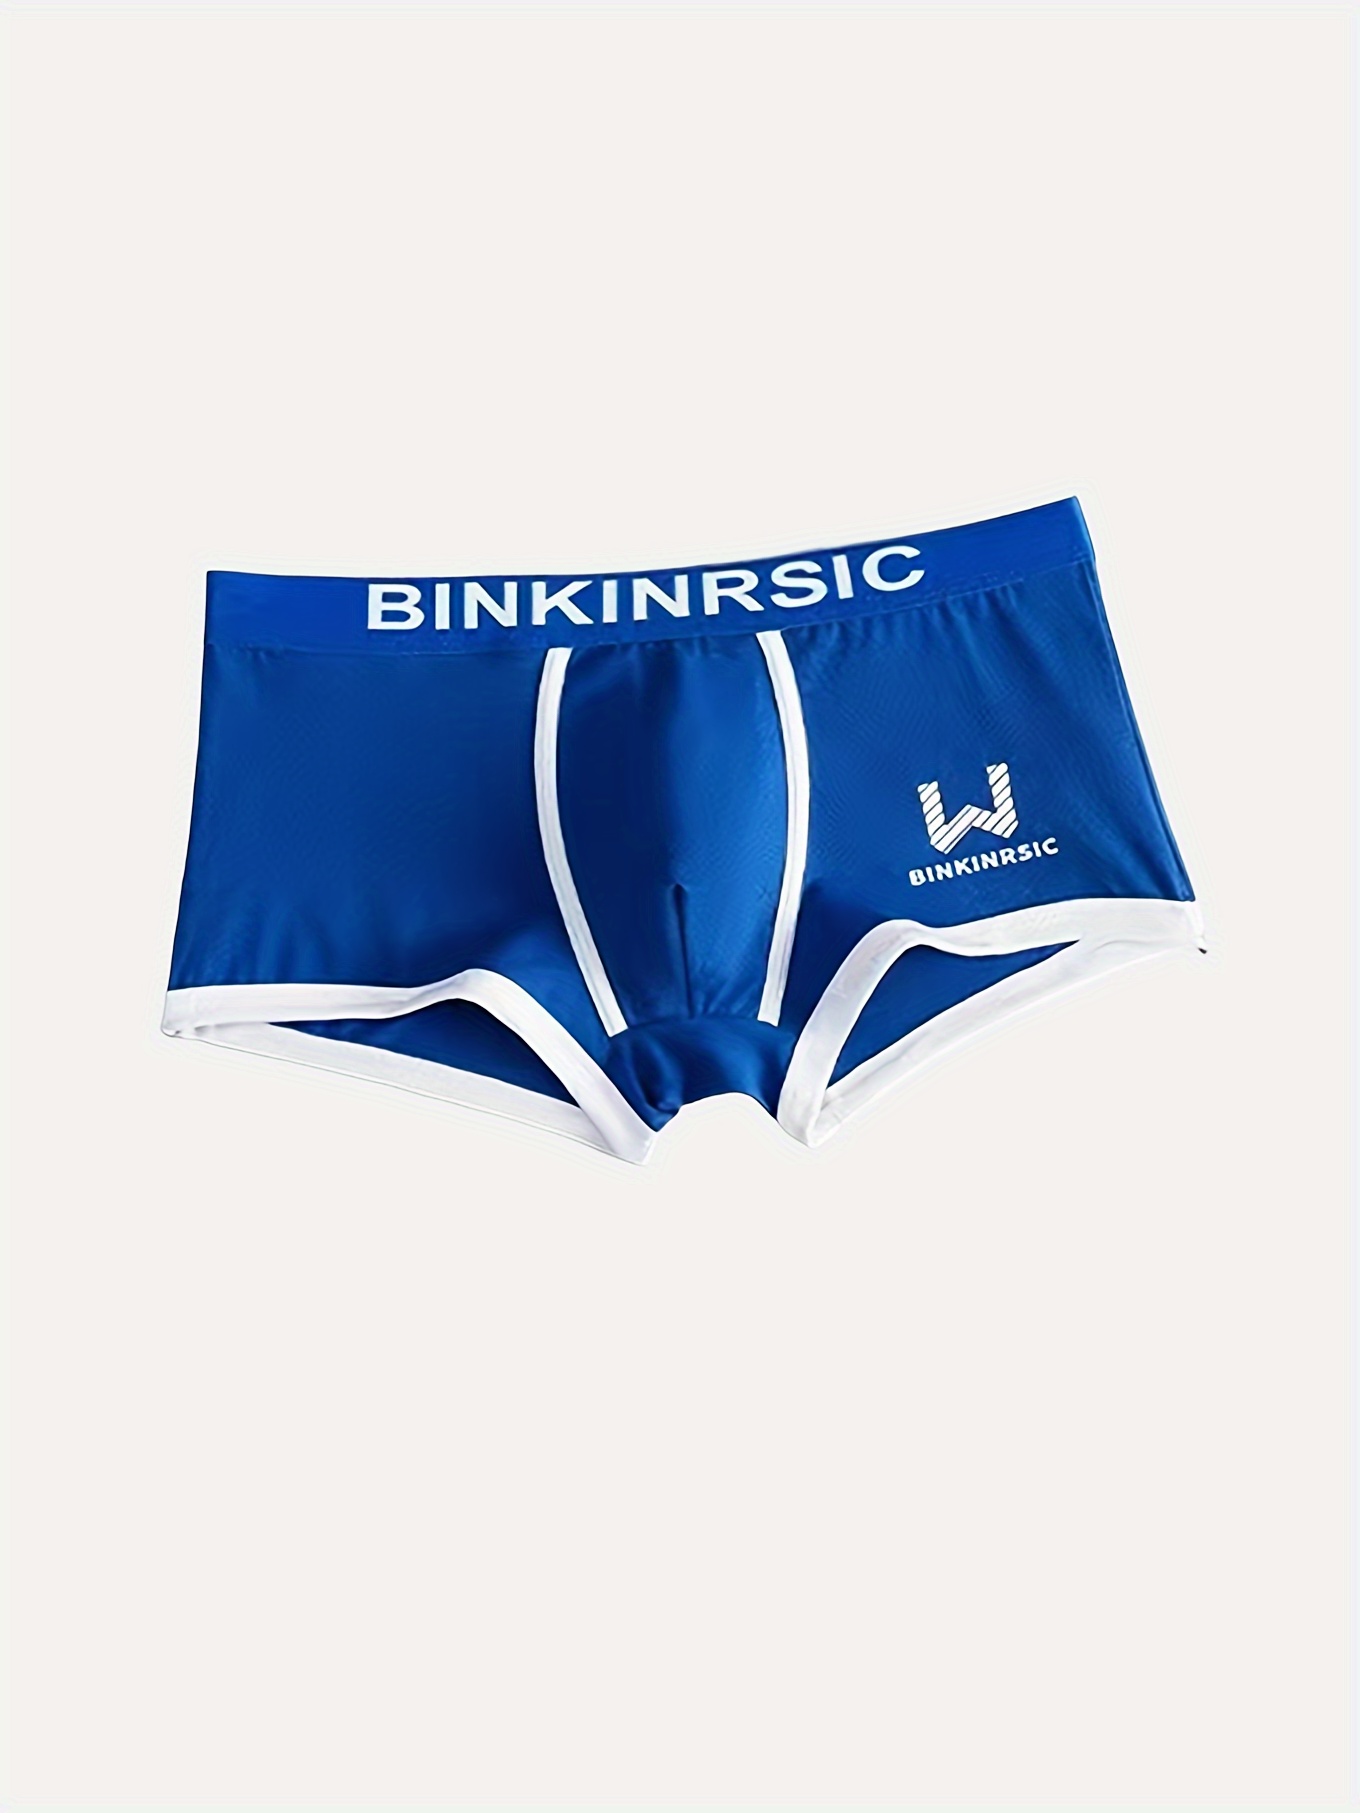 Minions Boxers Custom Photo Boxers Men's Underwear Plain Blue Boxers